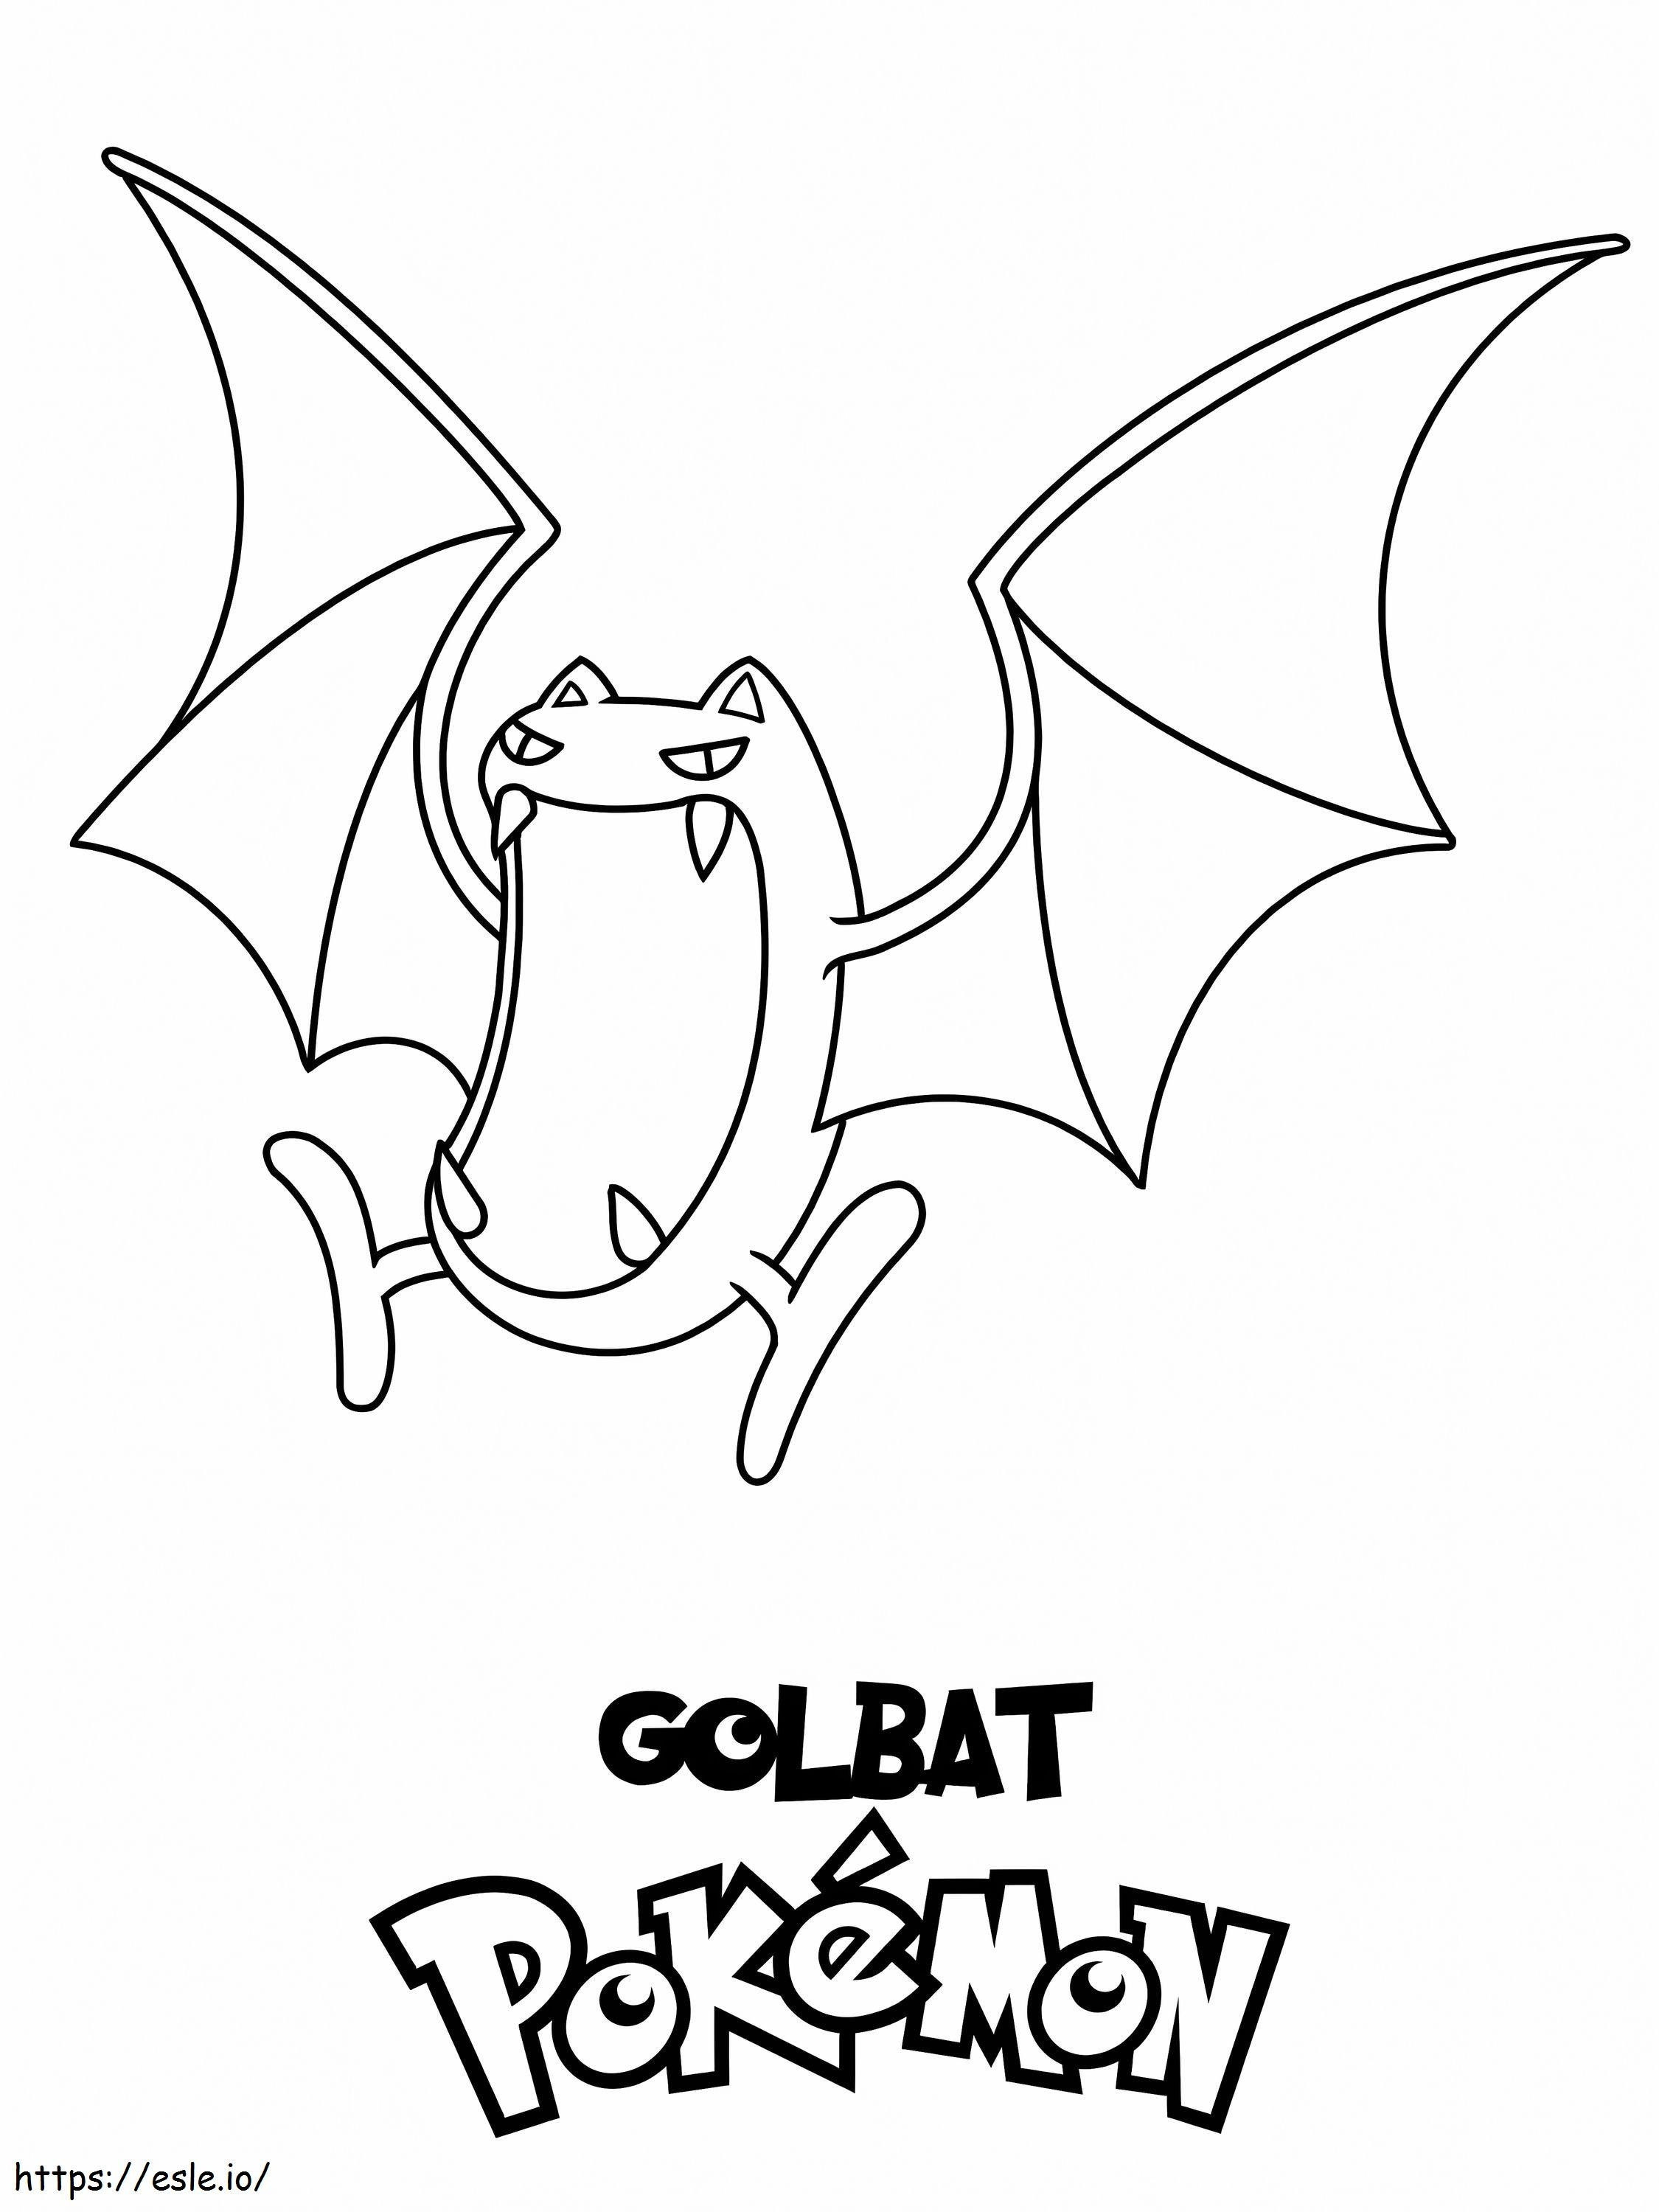 Printable Golbat Pokemon boyama